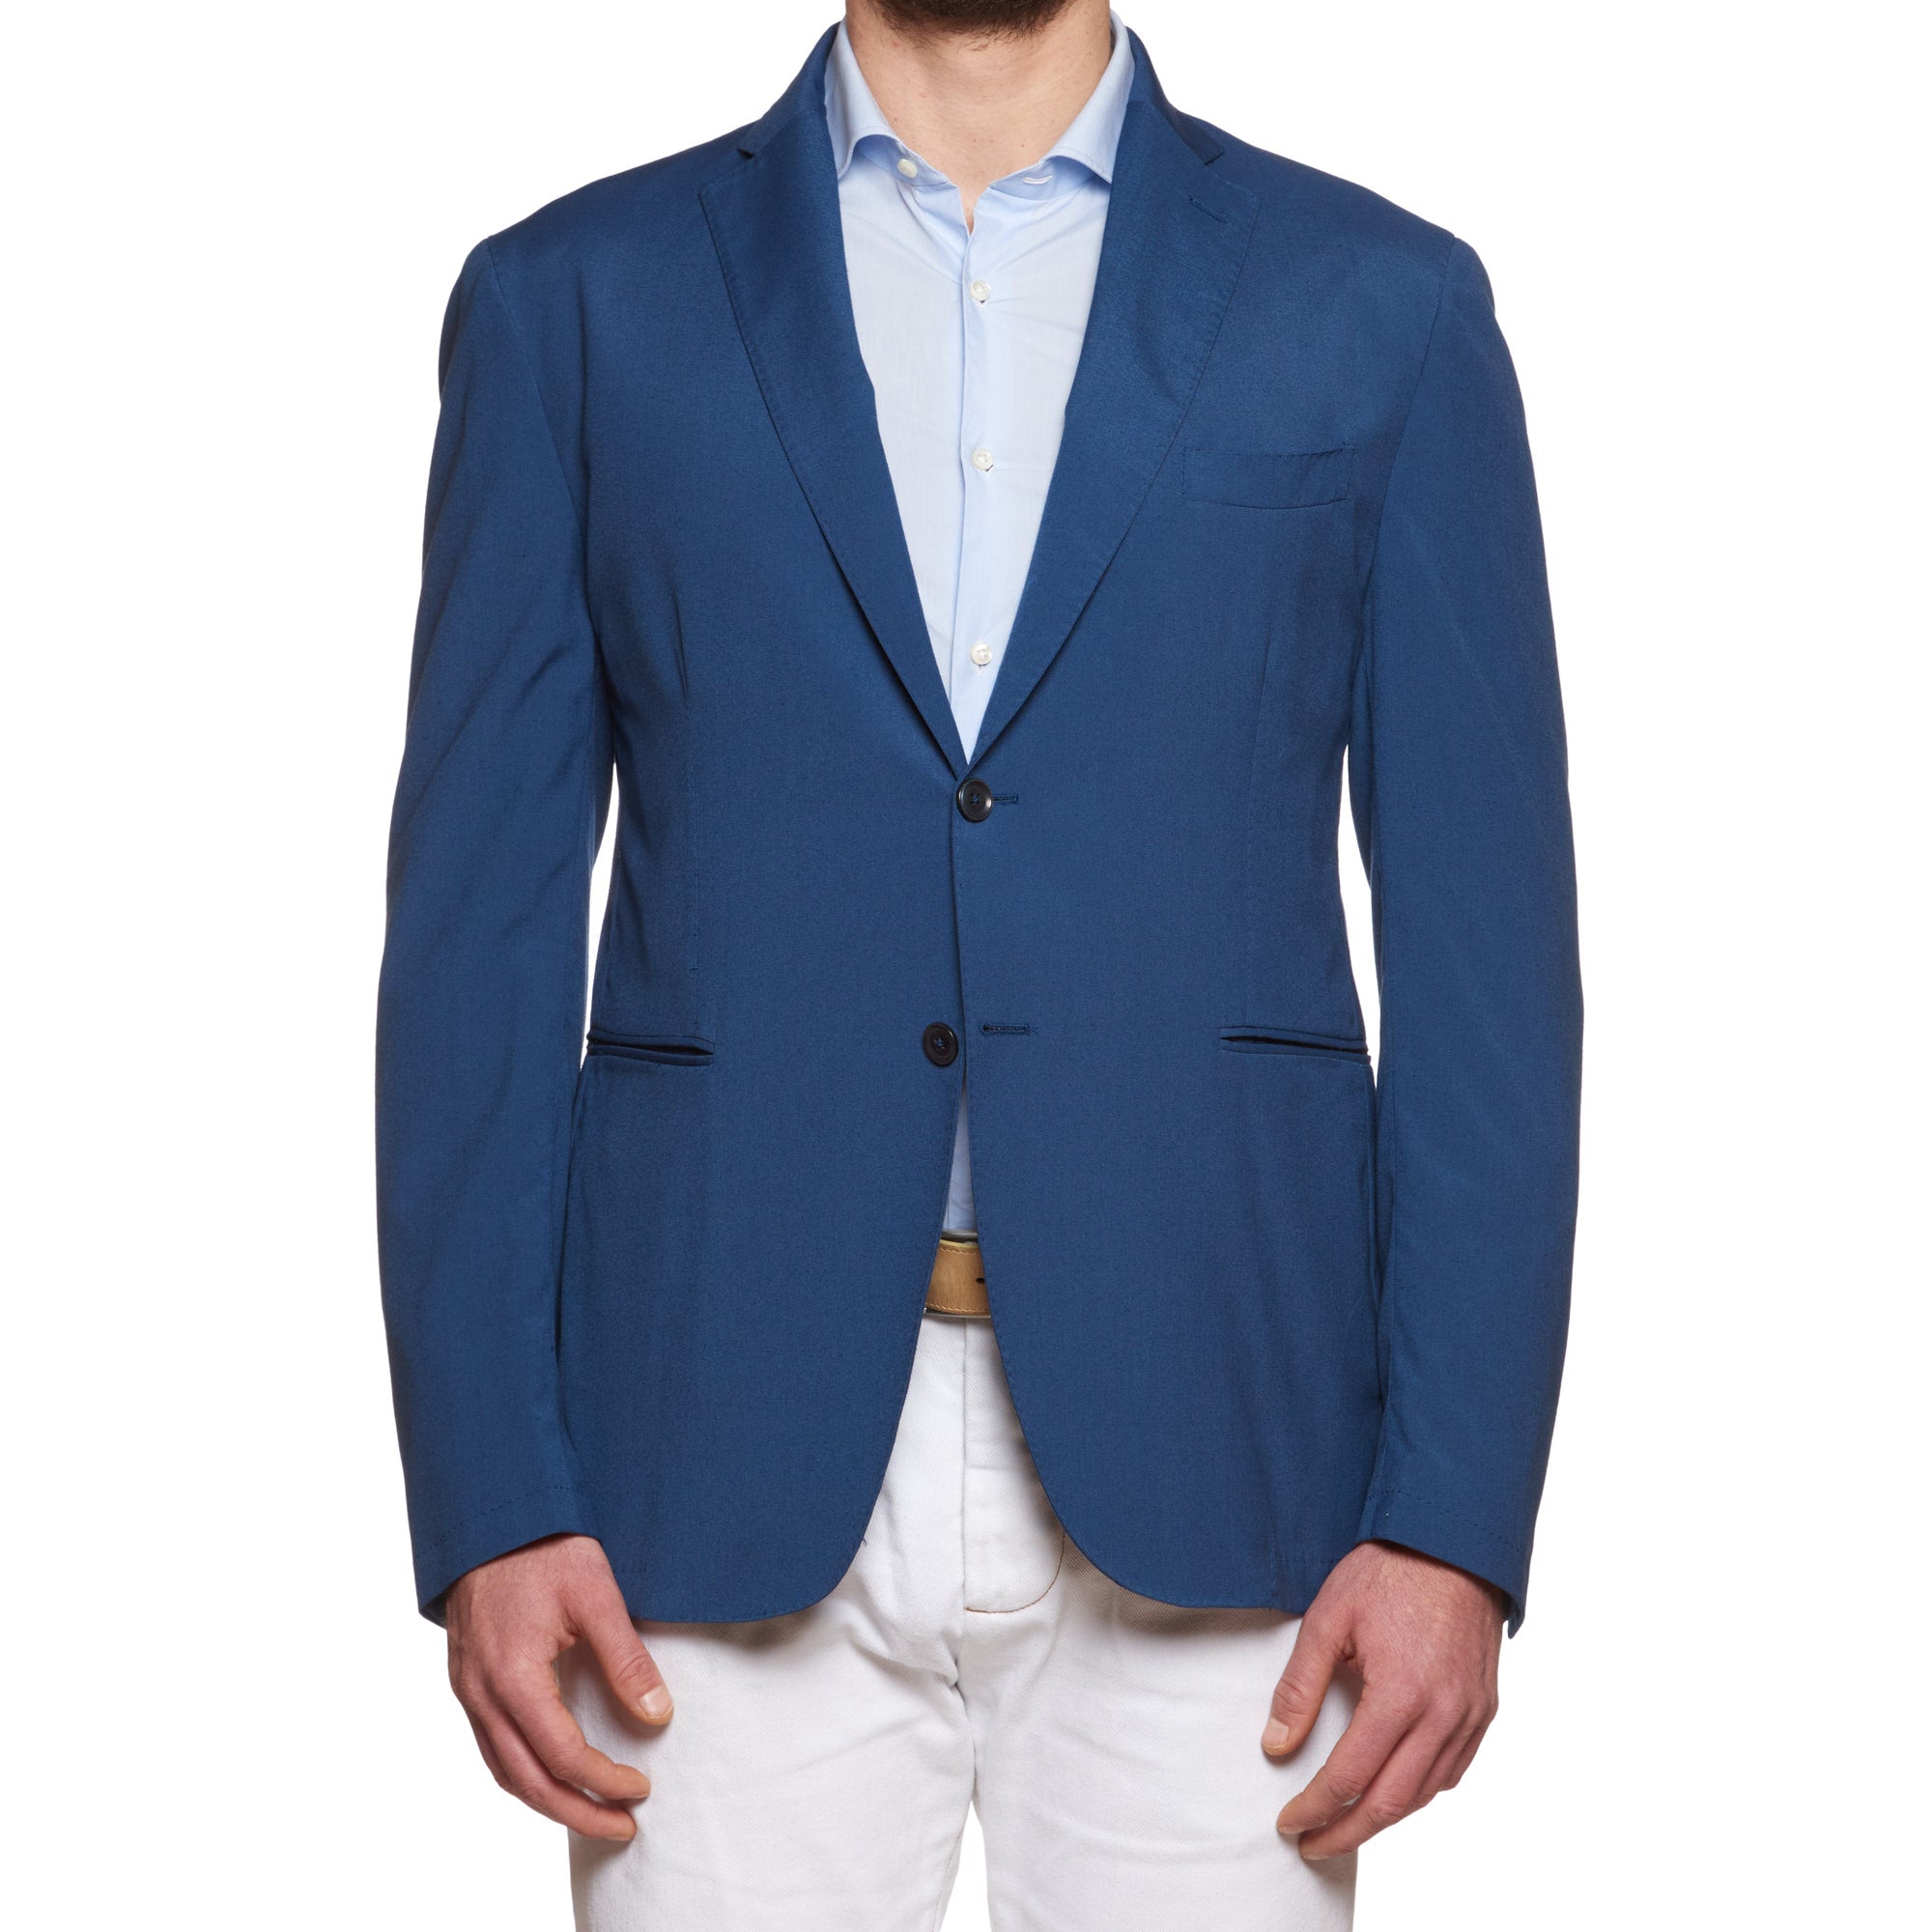 VINCENZO PALUMBO Napoli Blue Wool Sport Coat Jacket EU 56 NEW US 46 Slim Fit VINCENZO PALUMBO